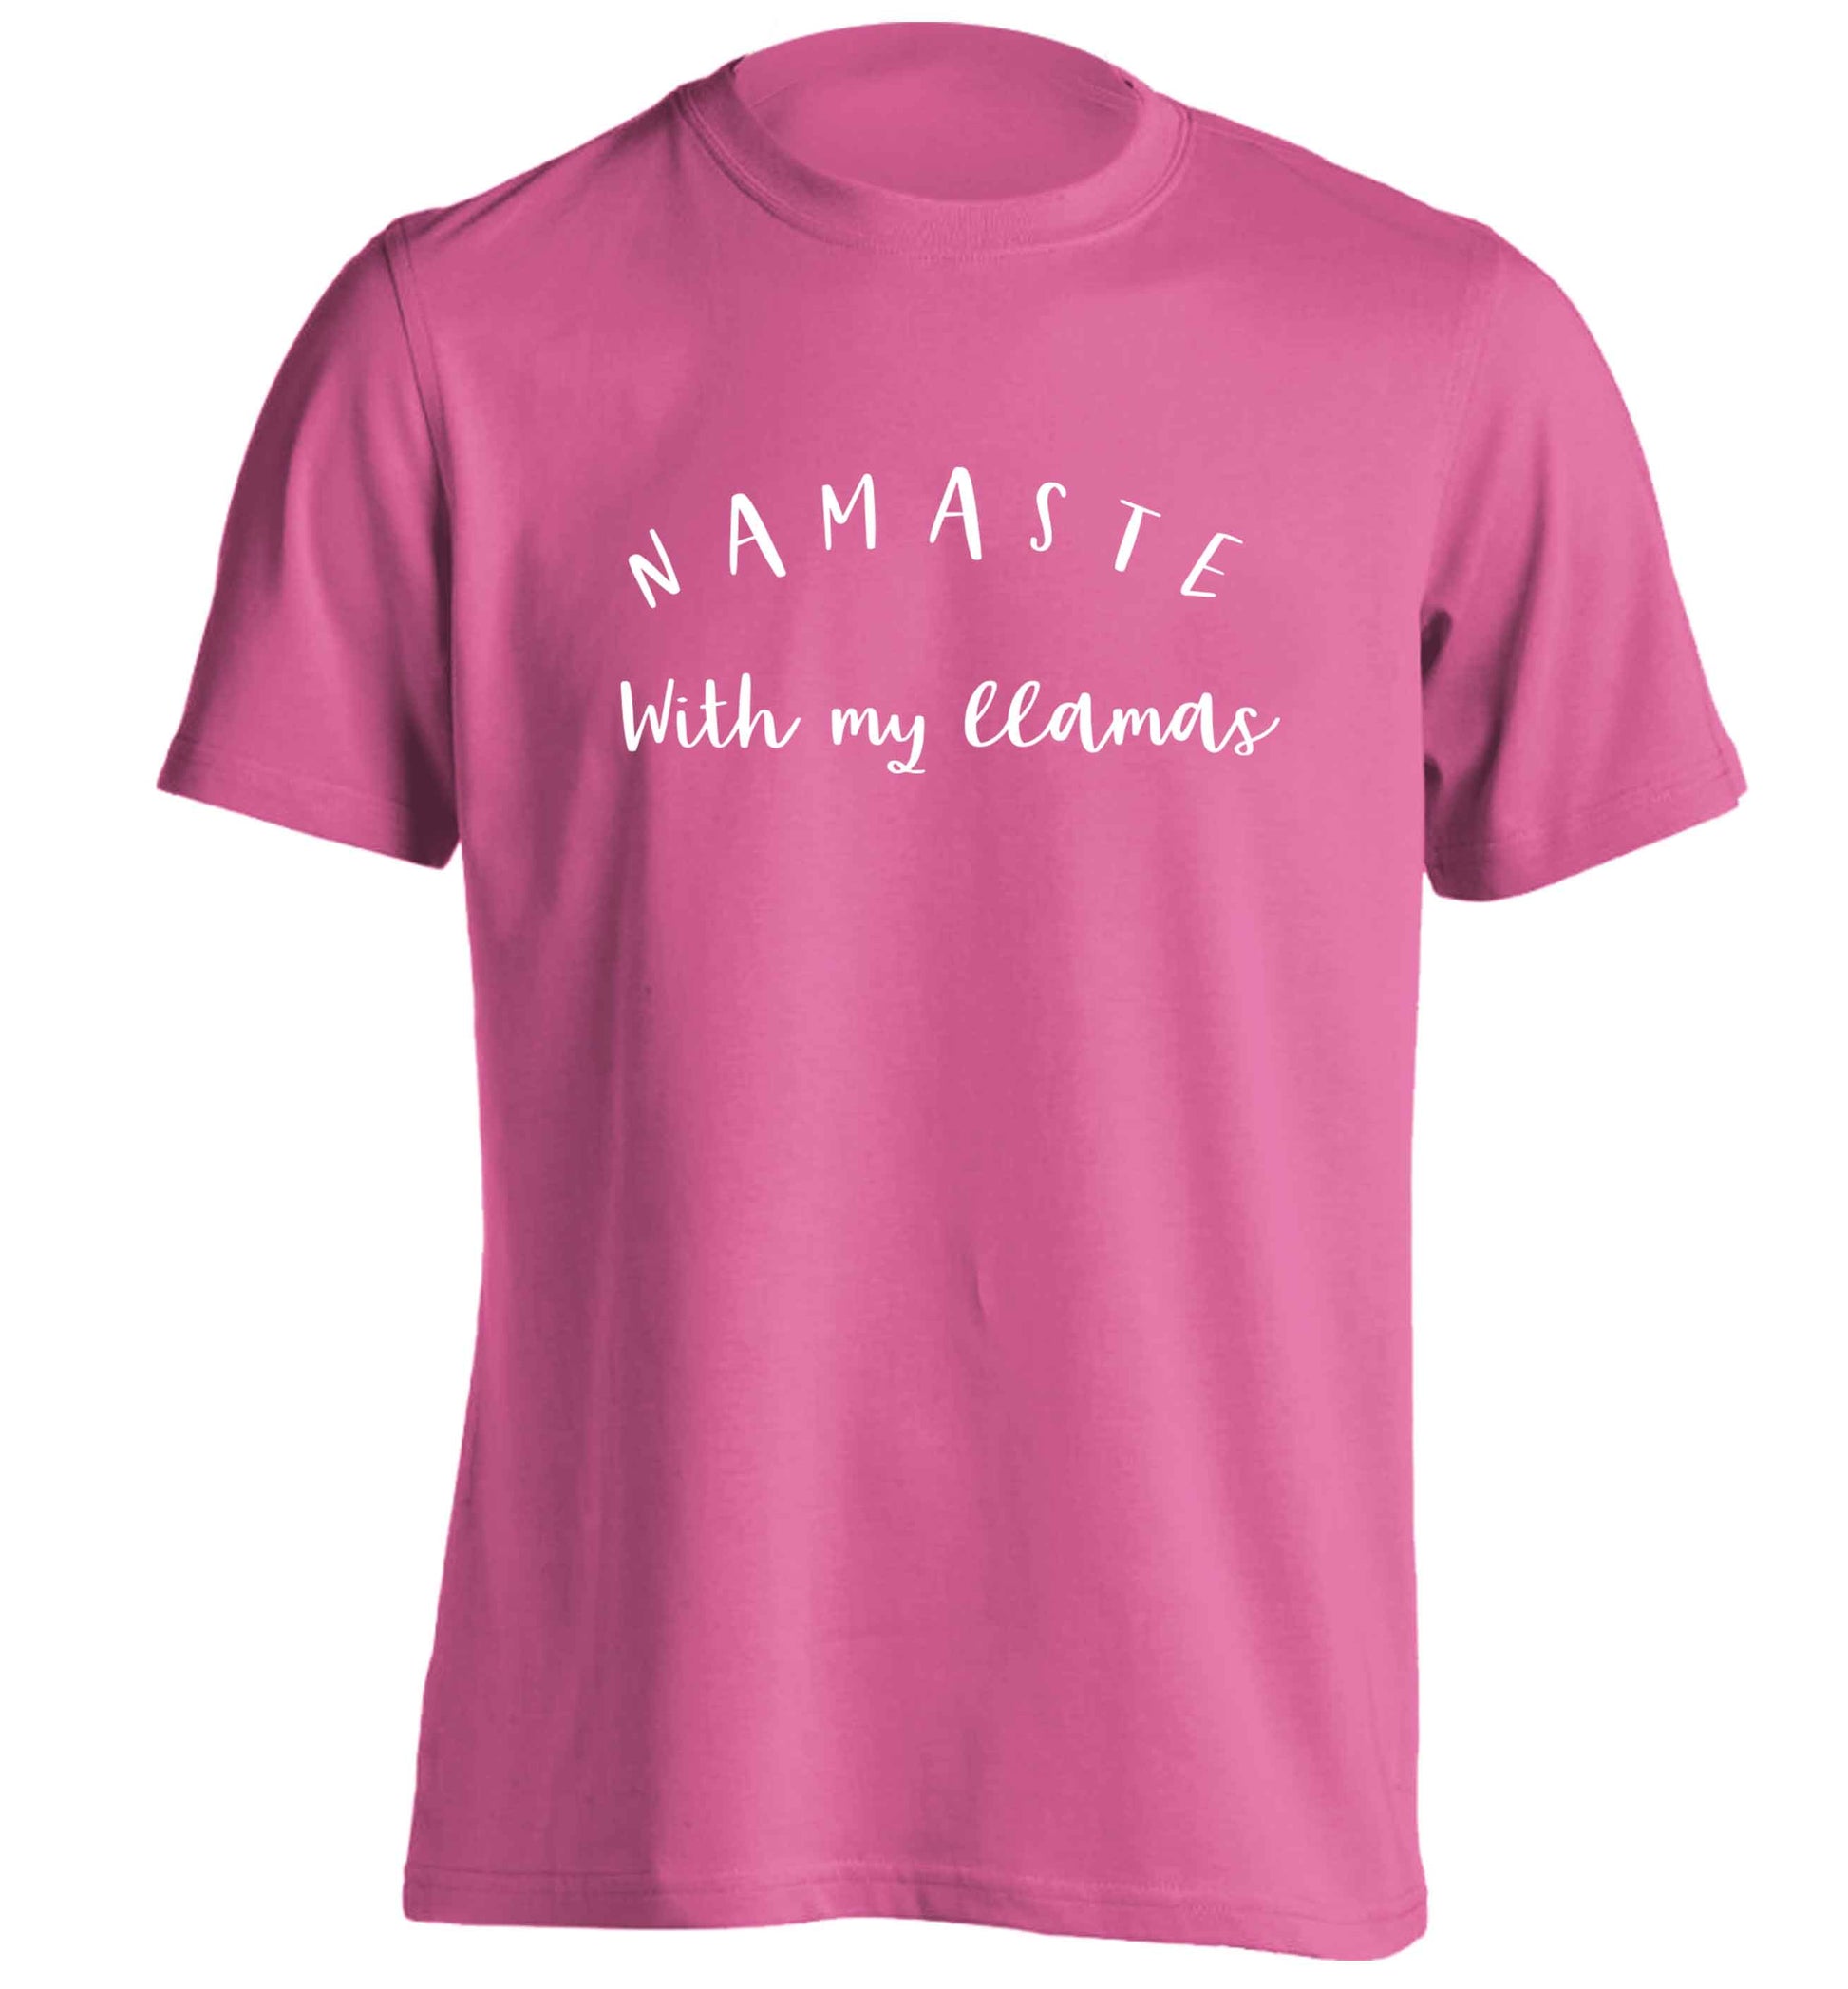 Namaste with my llamas adults unisex pink Tshirt 2XL